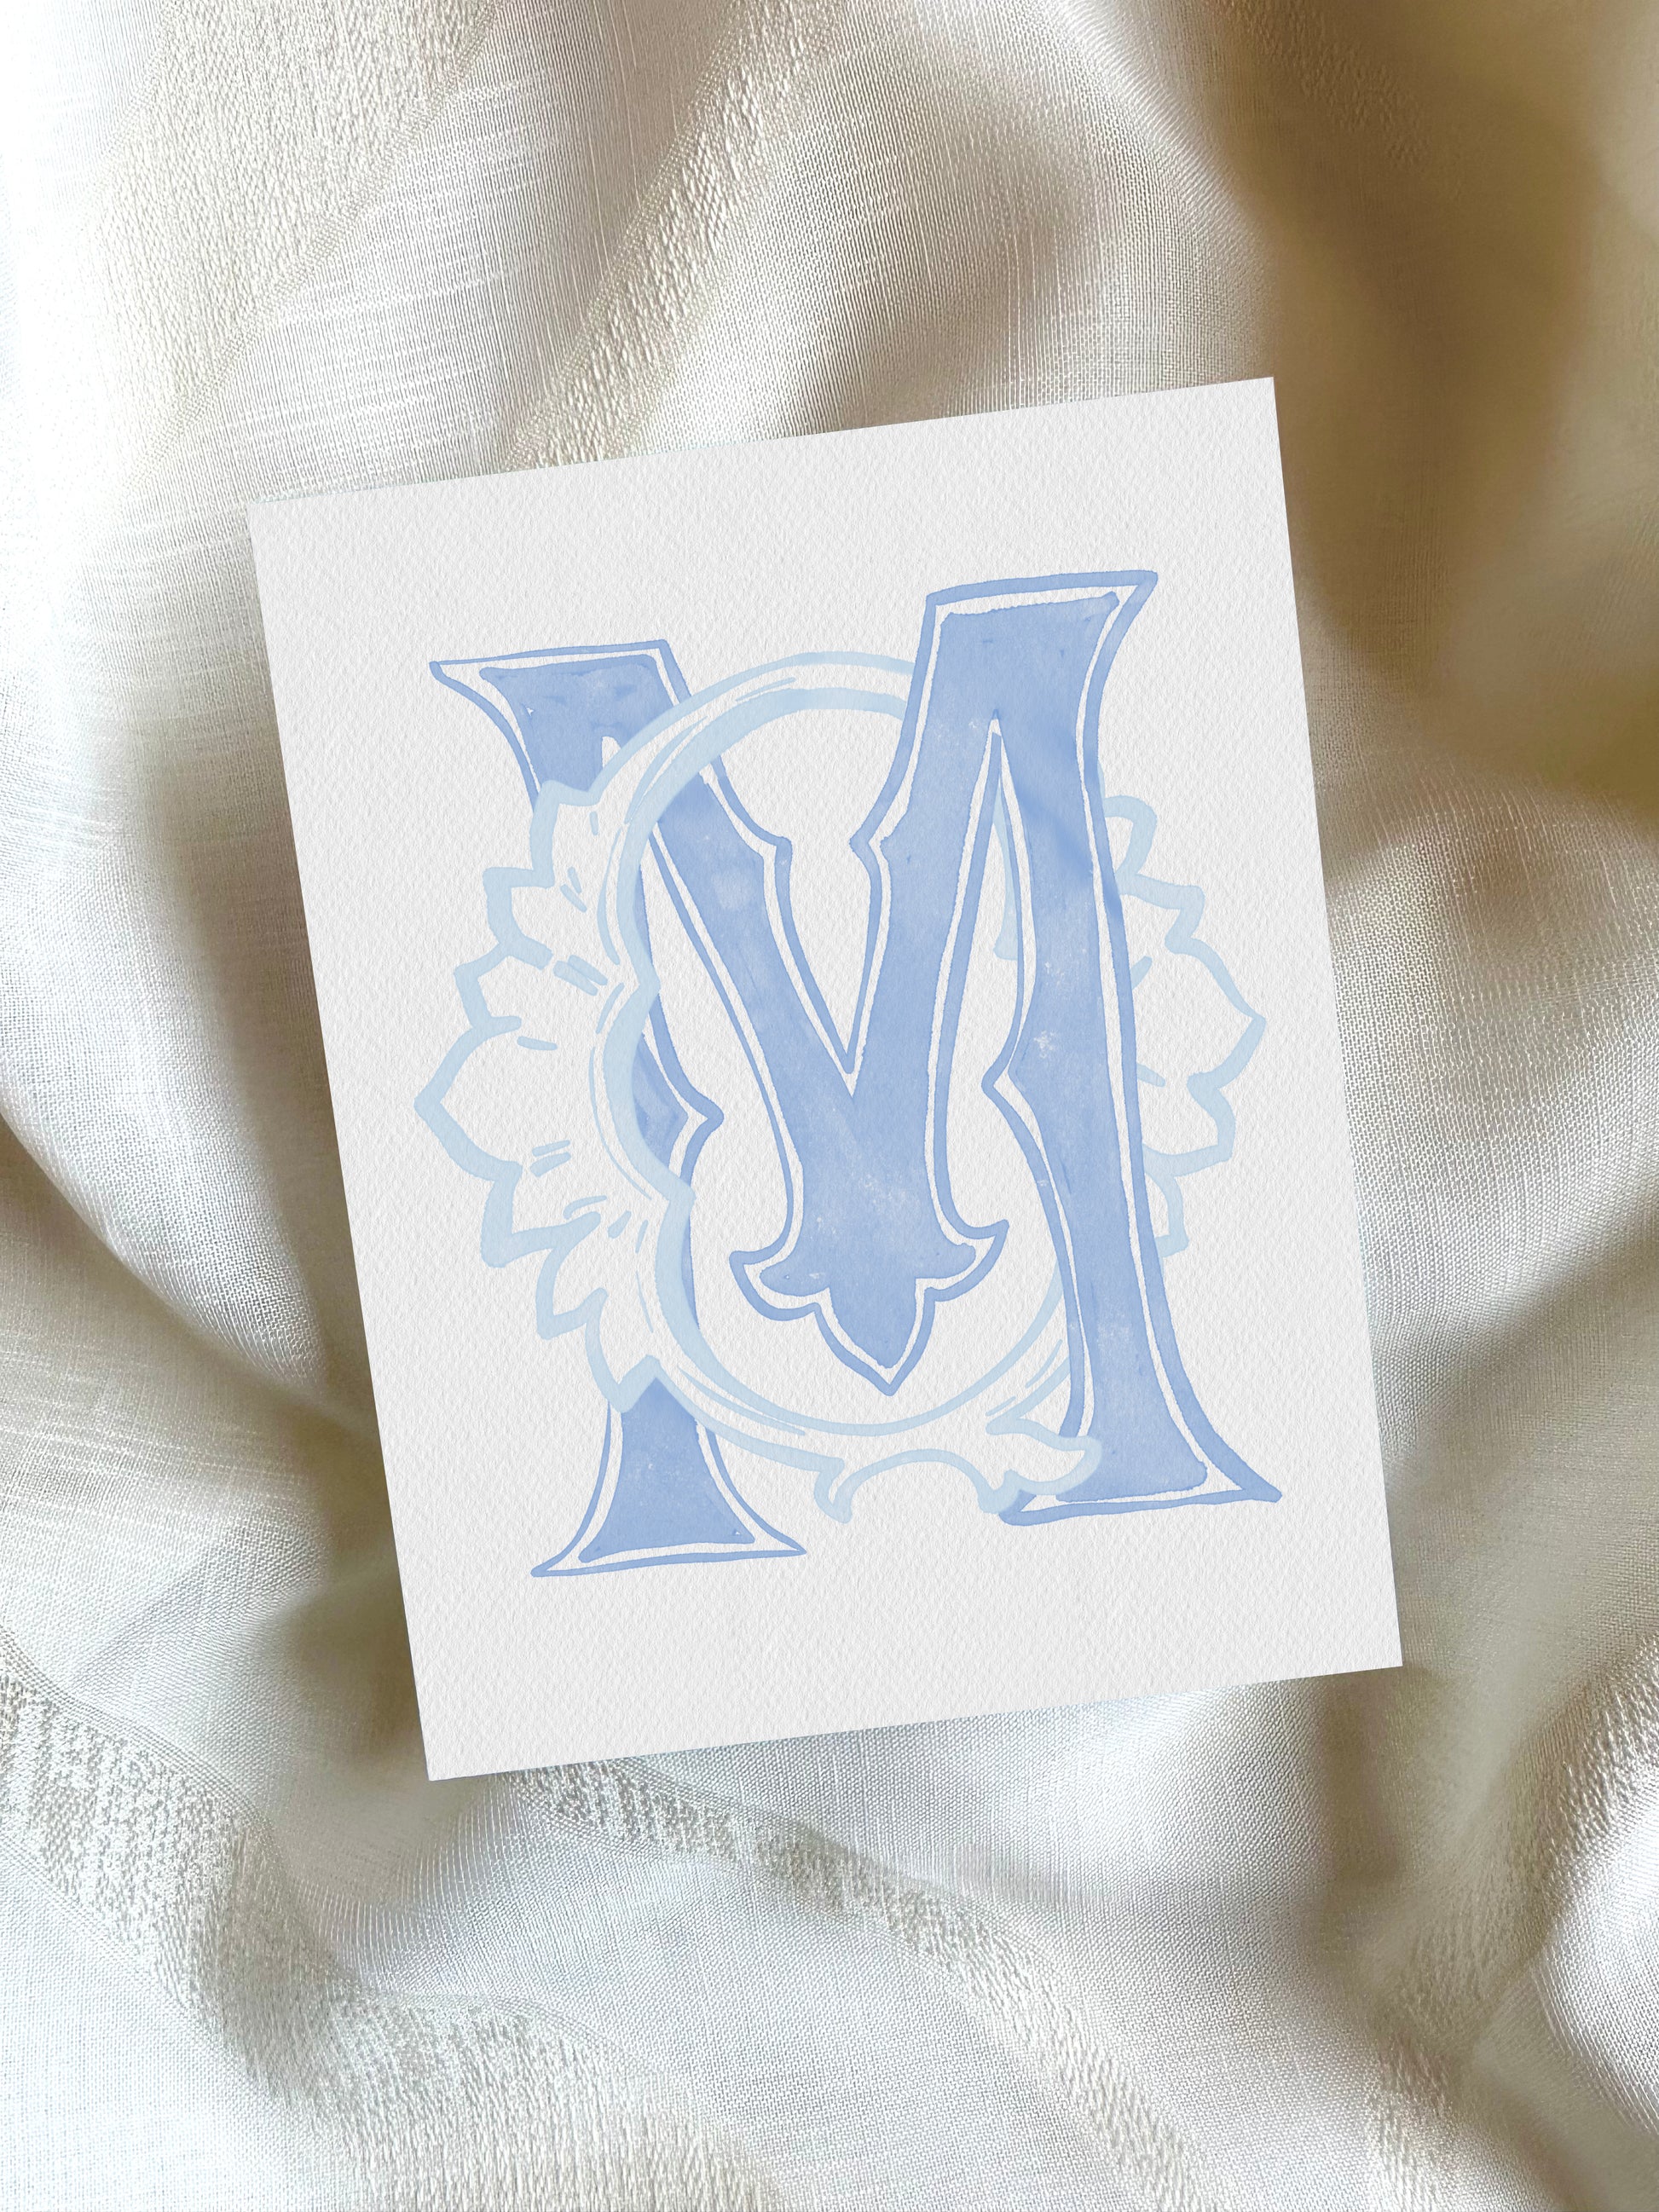 2 Letter Monogram with Letters MQ QM | Digital Download - Wedding Monogram SVG, Personal Logo, Wedding Logo for Wedding Invitations The Wedding Crest Lab